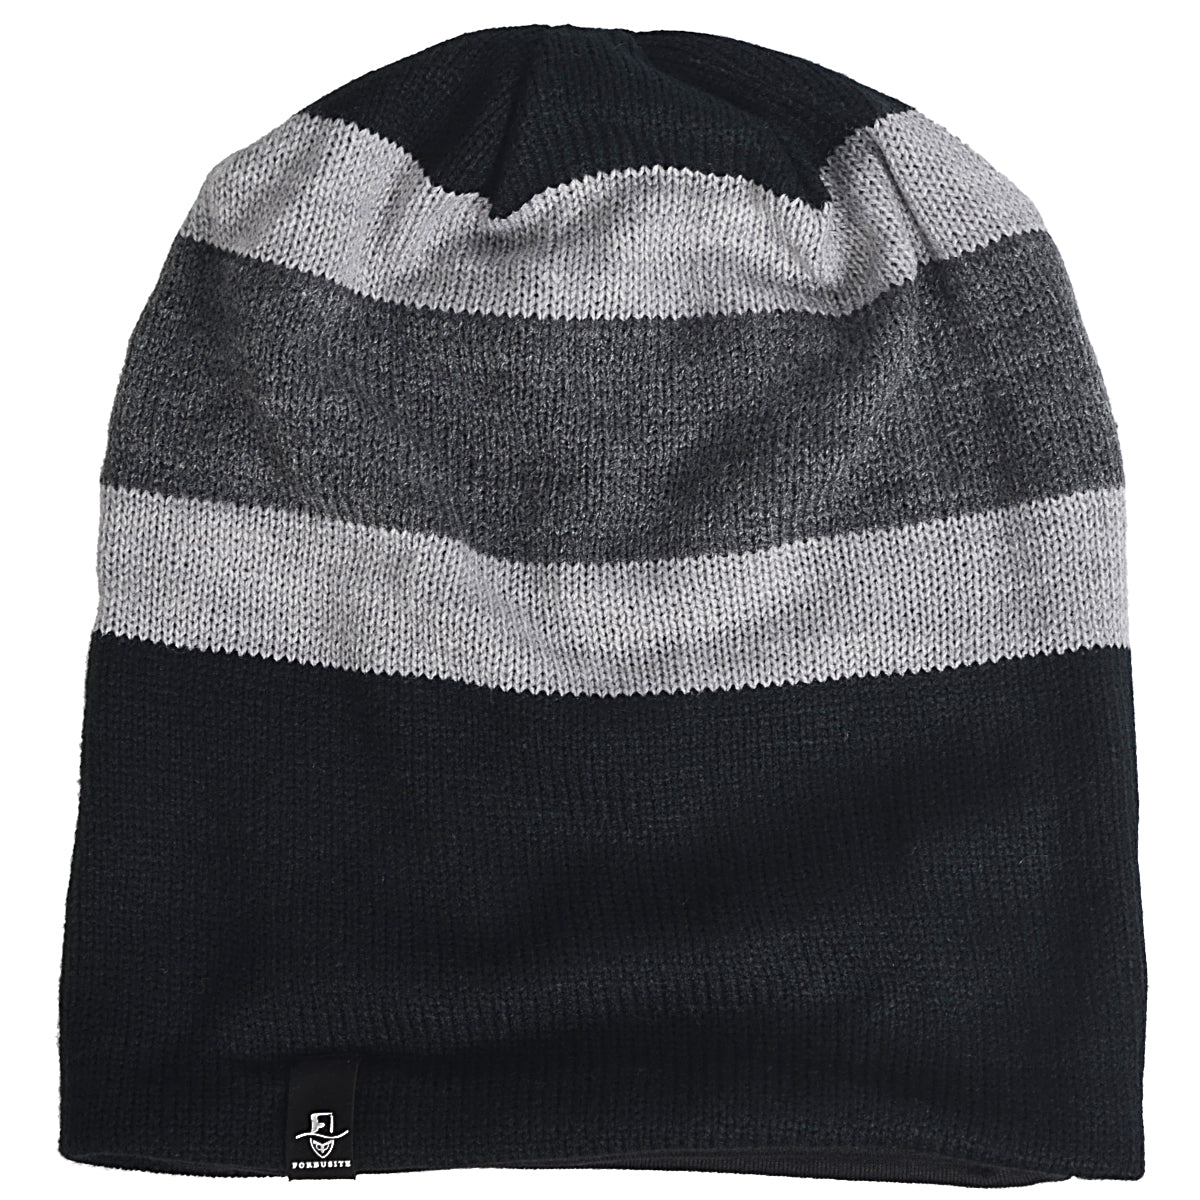  forbusite knit cap